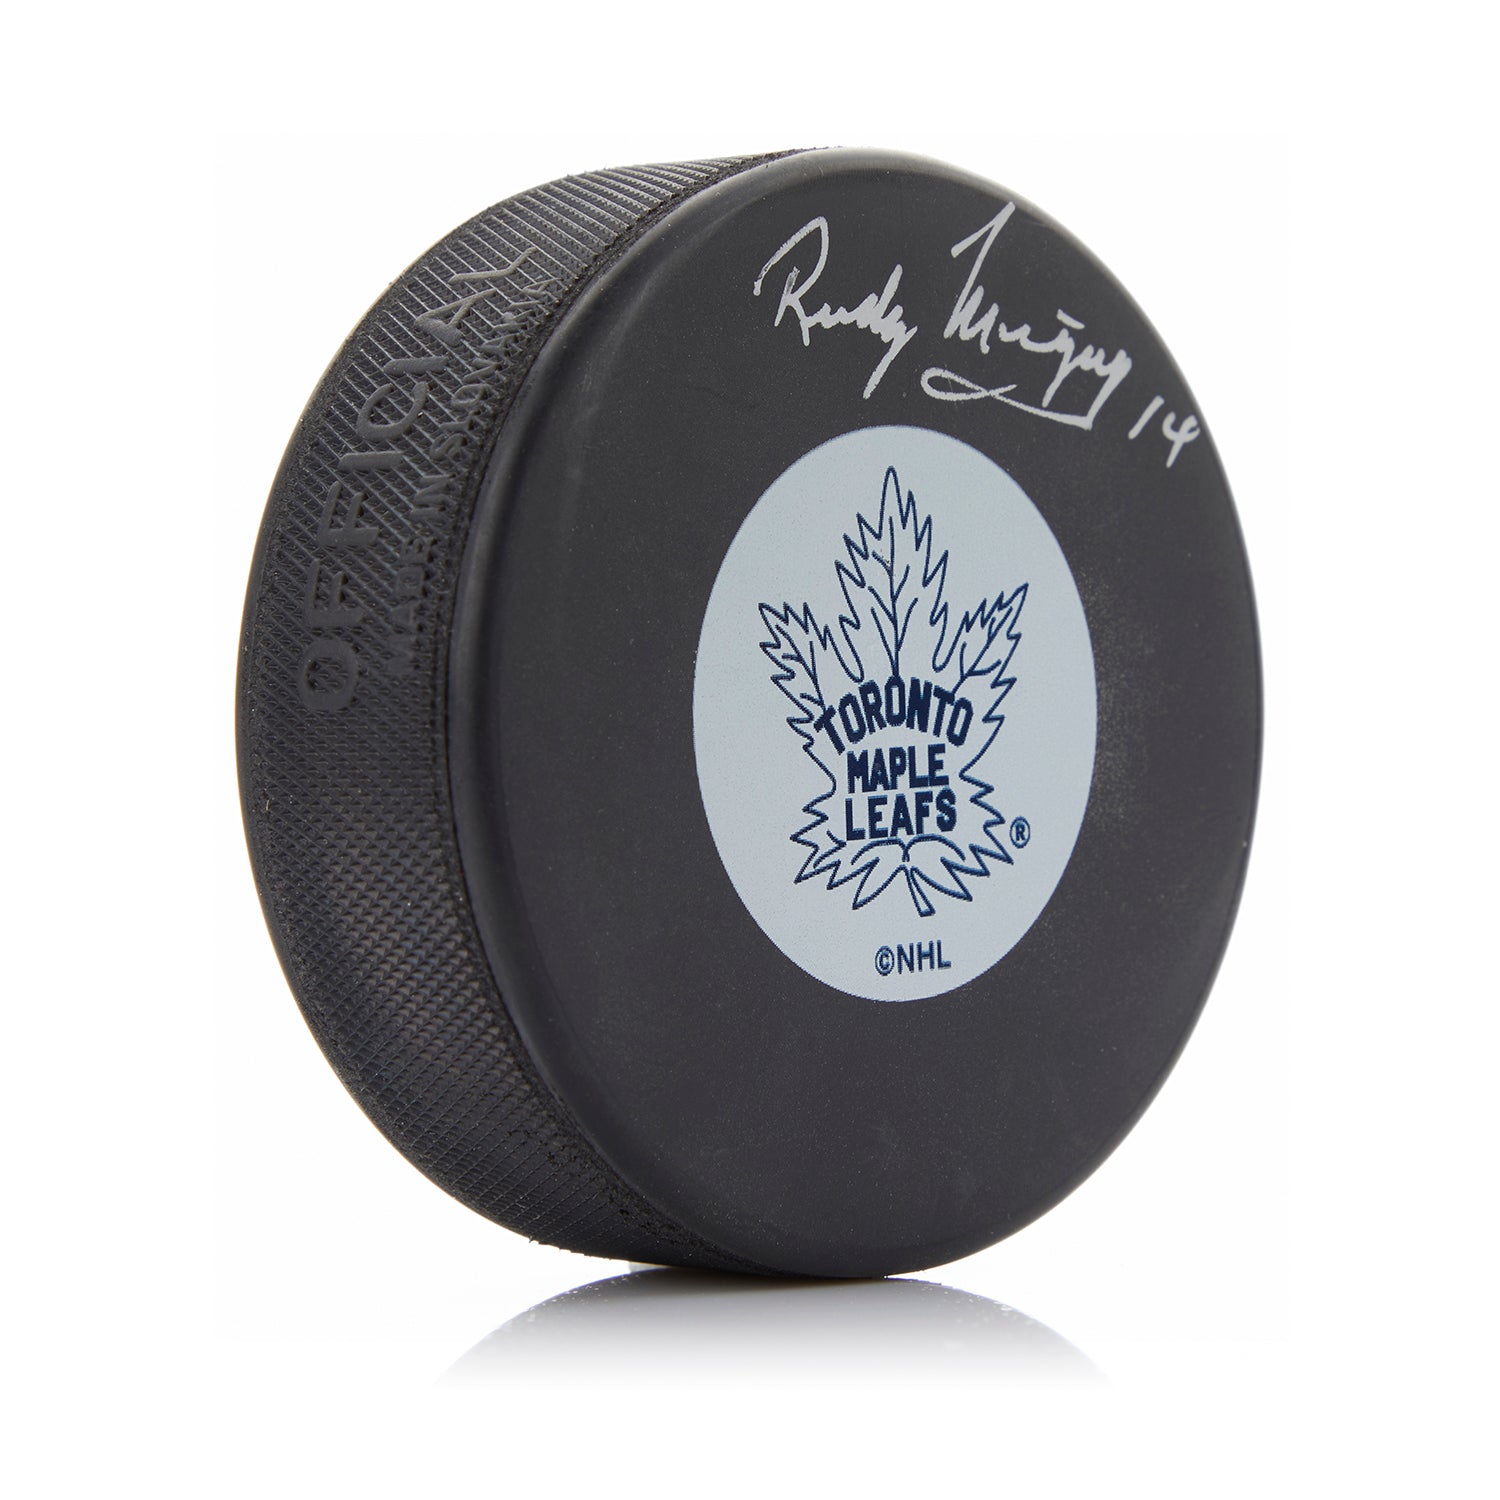 Rudy Migay Autographed Toronto Maple Leafs Hockey Puck